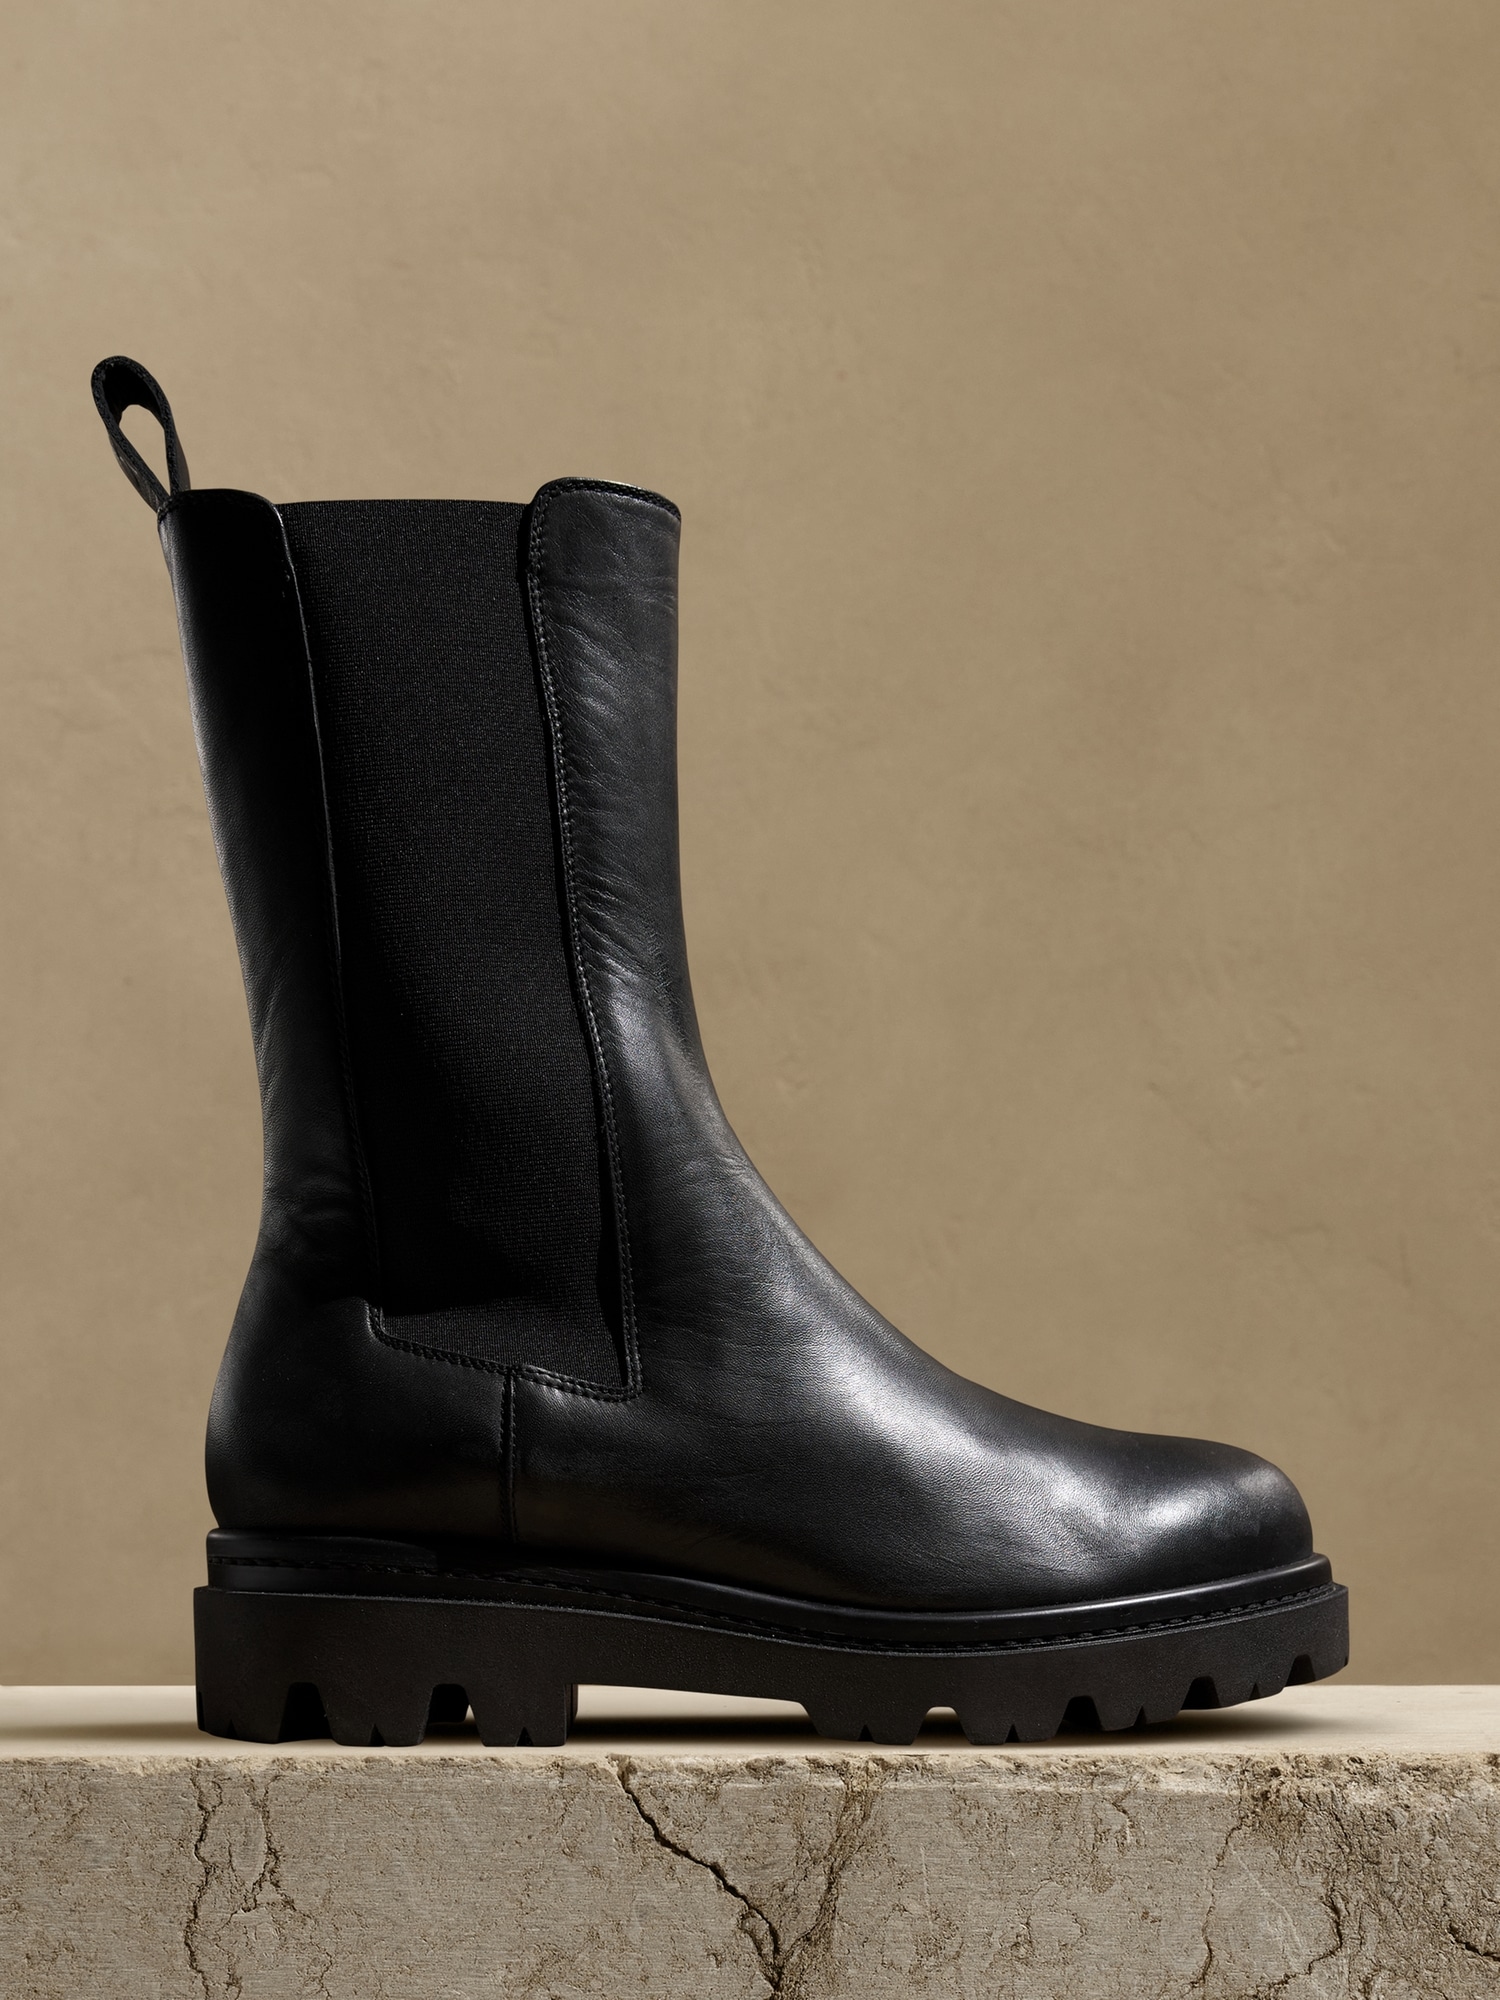 Banana Republic Hudson Tall Leather Chelsea Boot black - 504369002